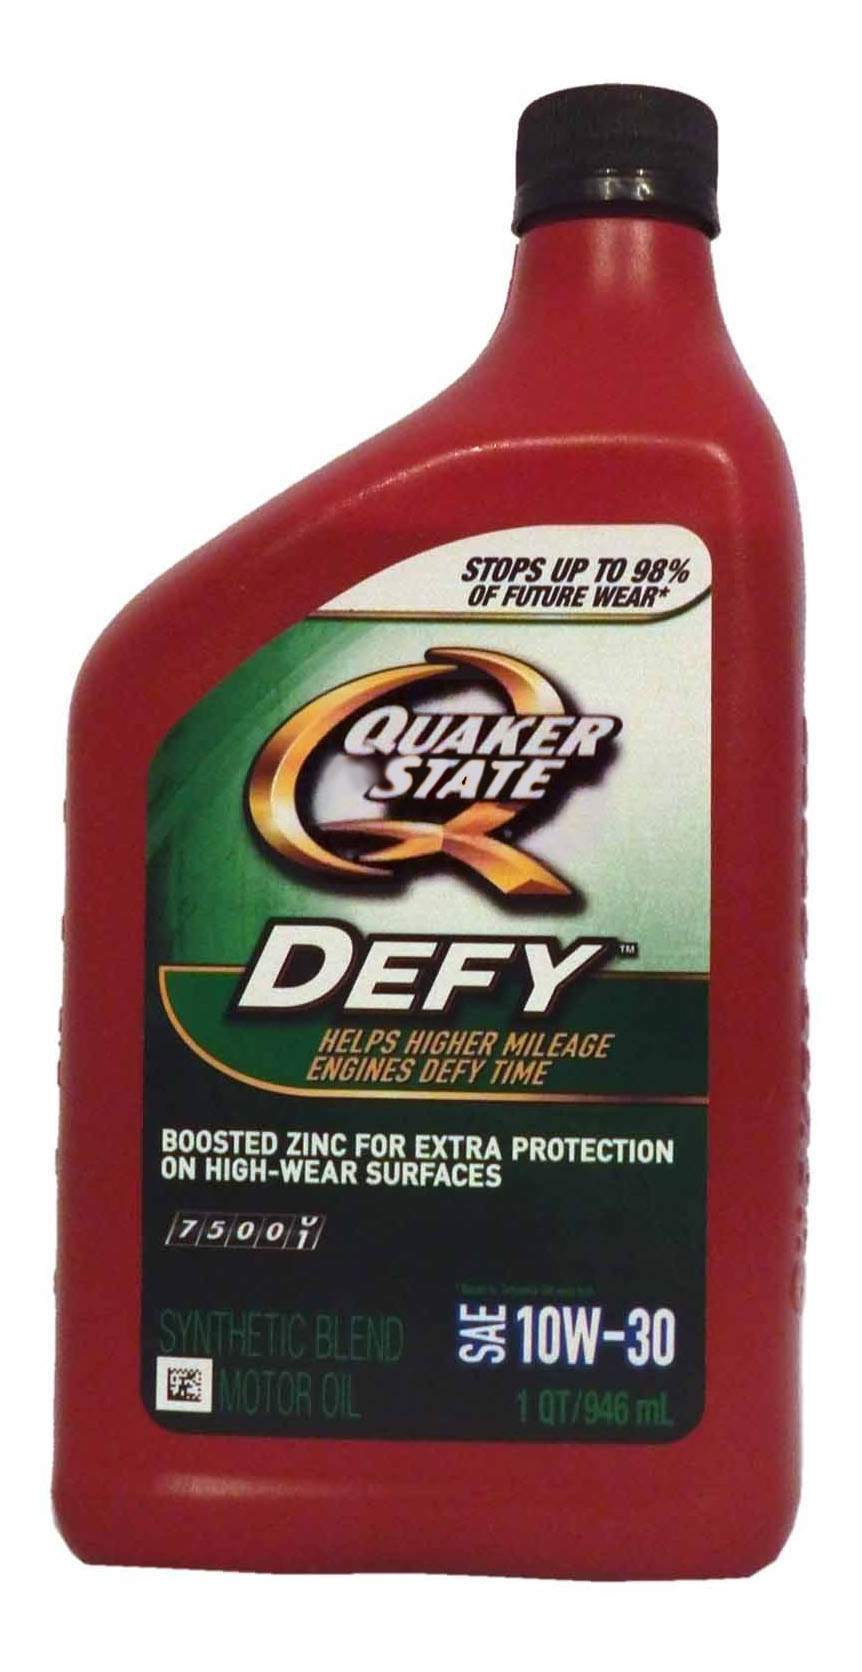 Quaker State Defy Synthetic Blend Motor Oil